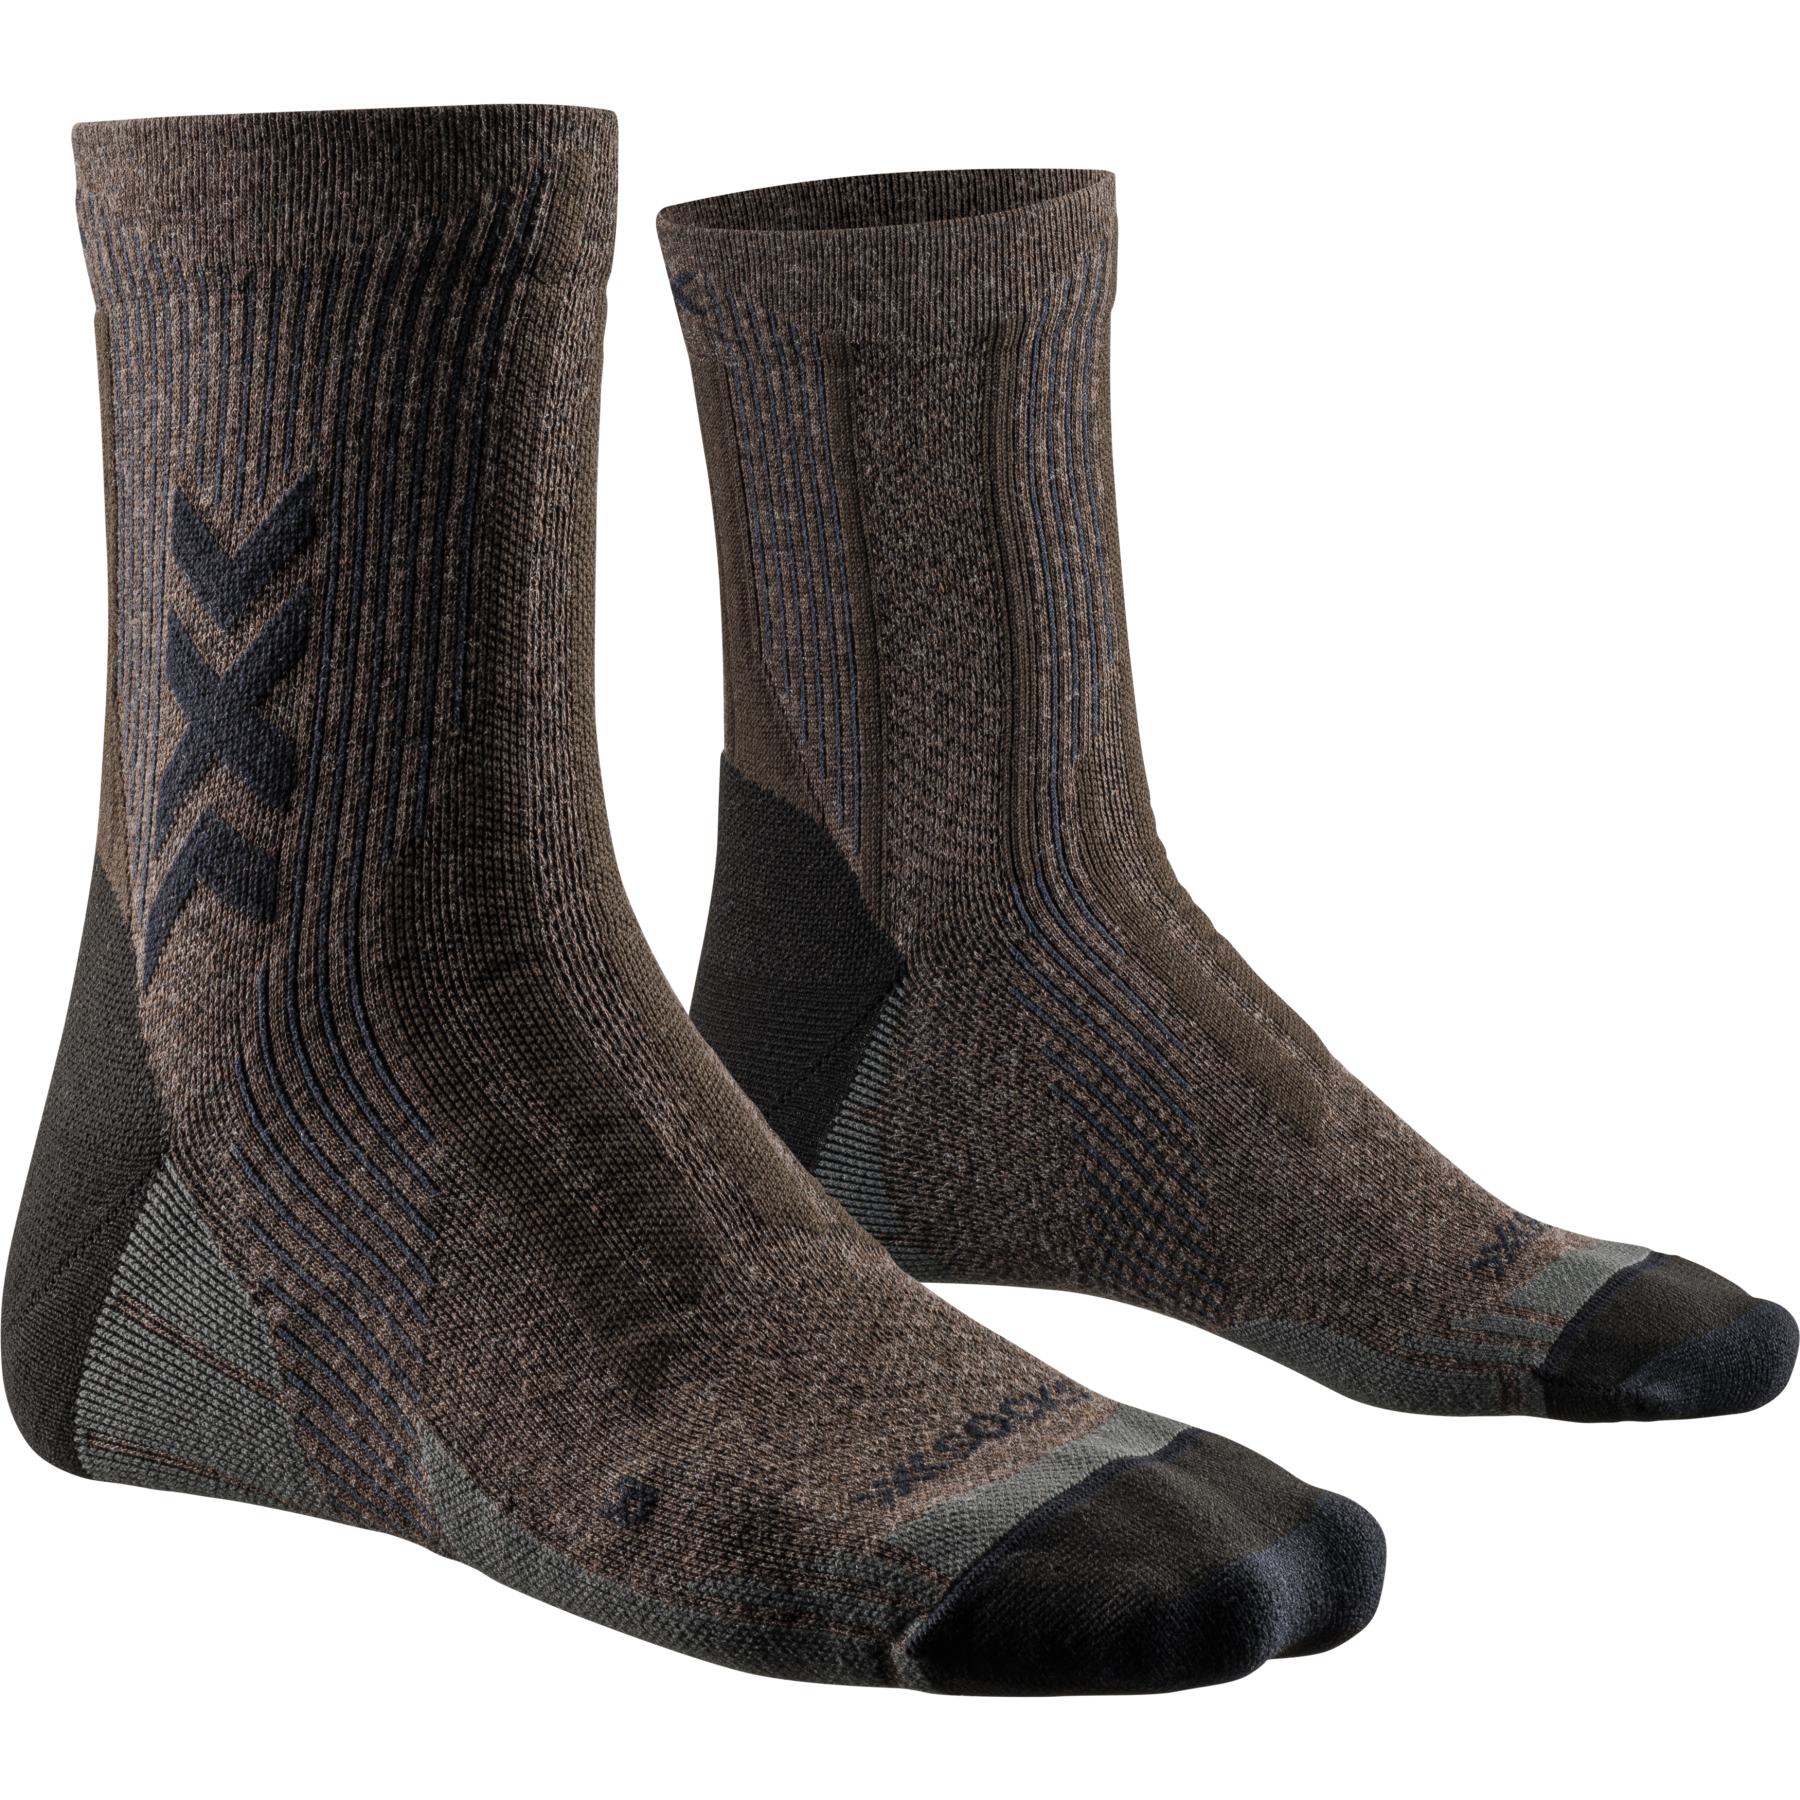 Picture of X-Socks Hike Perform Natural Ankle Socks - brown/black